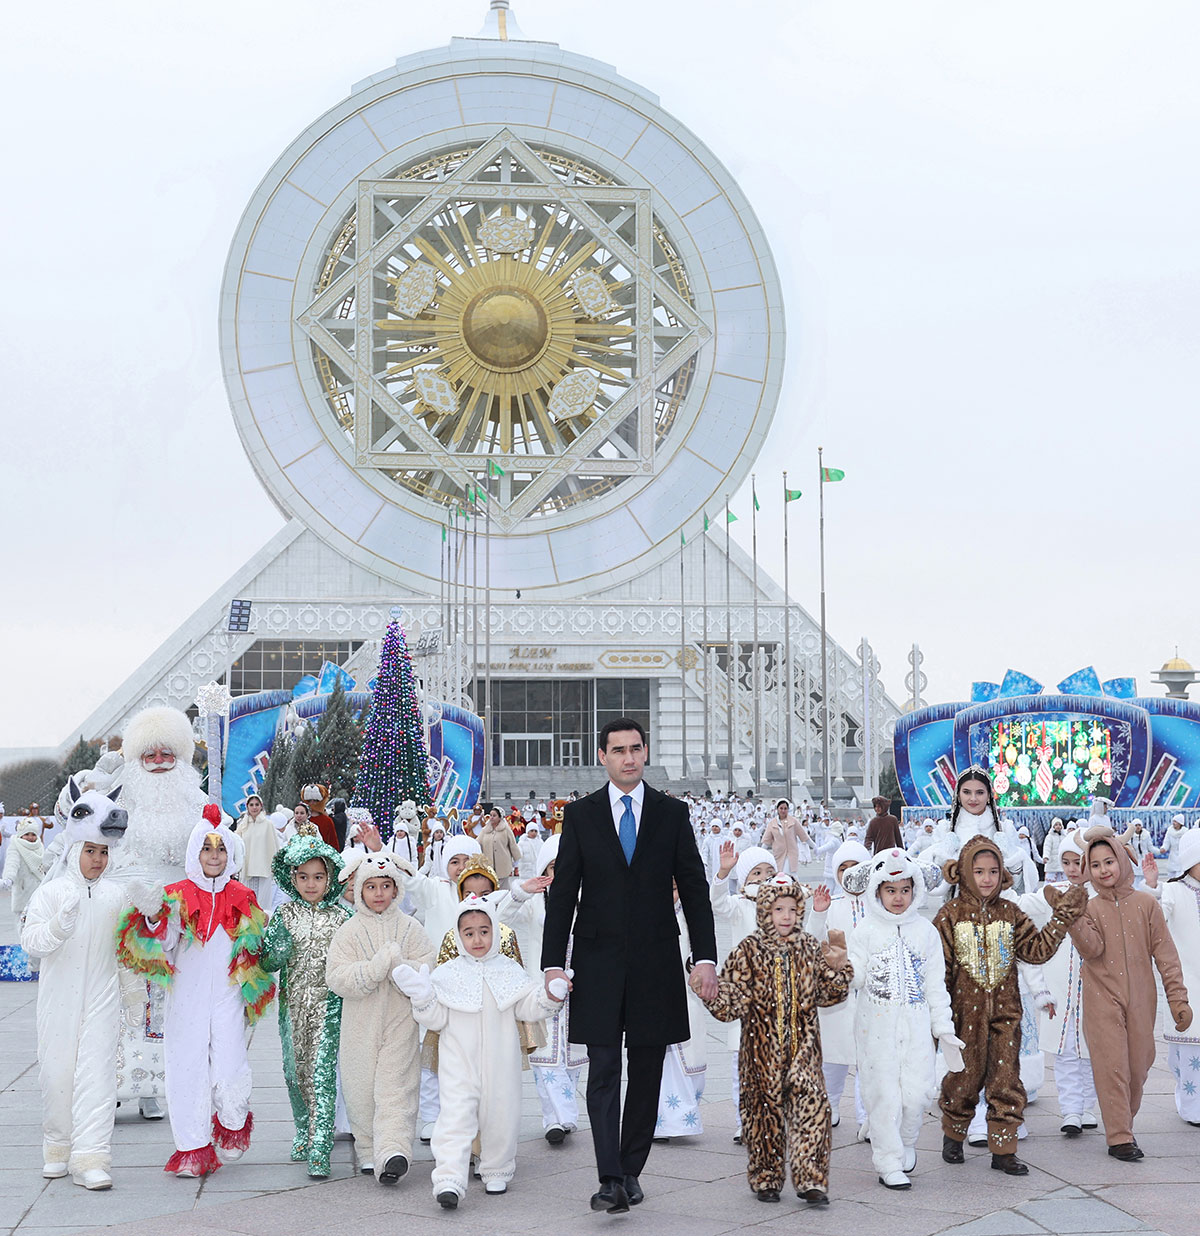 Türkmenistanyň Prezidenti ýurdumyzyň Baş arçasynyň ýanynda guralan Täze ýyl dabaralaryna gatnaşdy